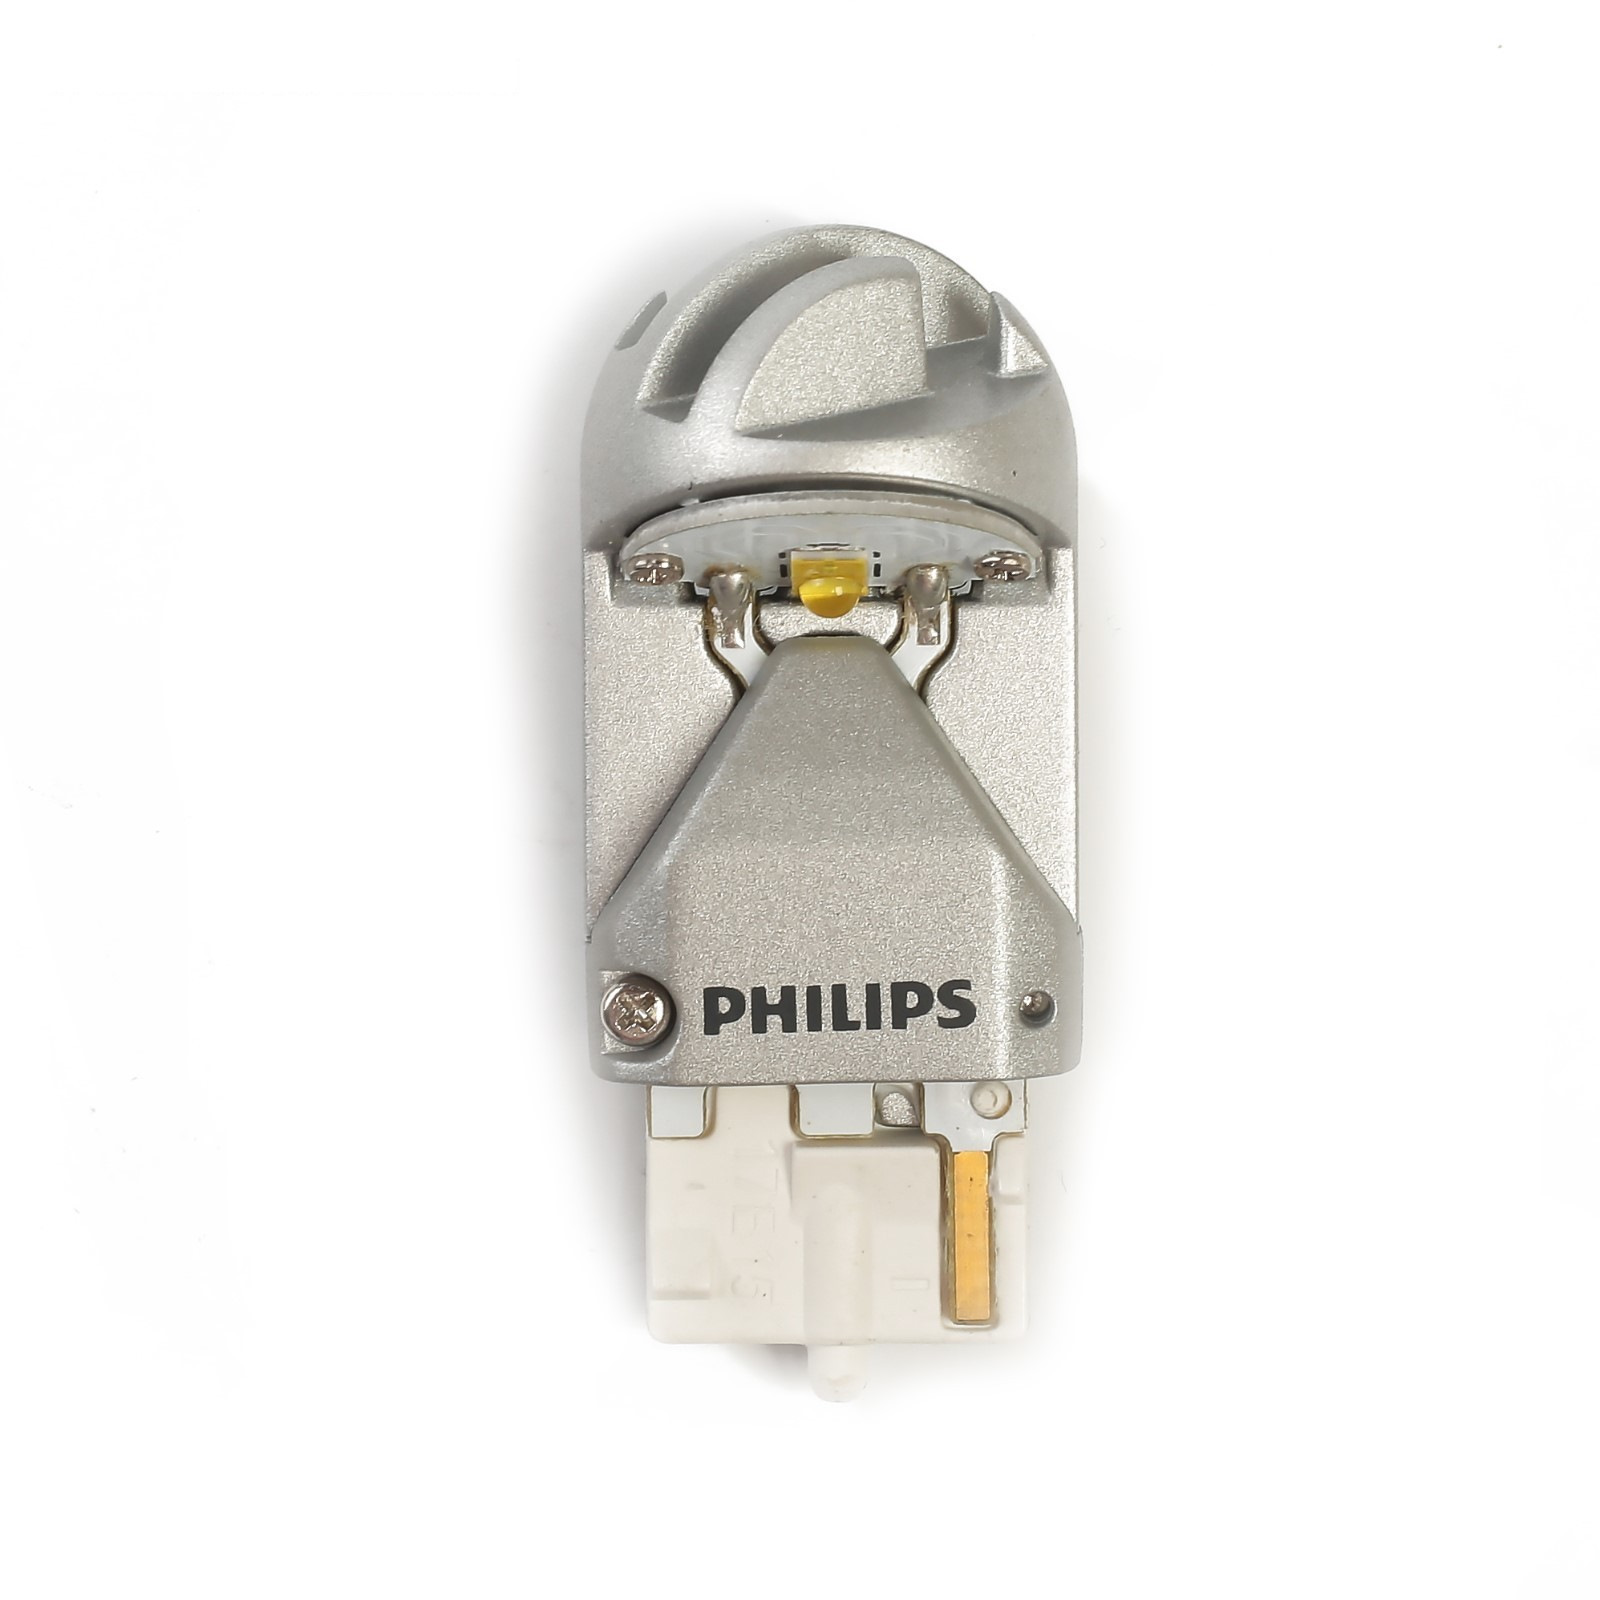 Led philips 12v. W21w led Philips. Philips w21w 12795x1. W16w лампа светодиодная Philips. W21/5v лампа светодиодная Philips.